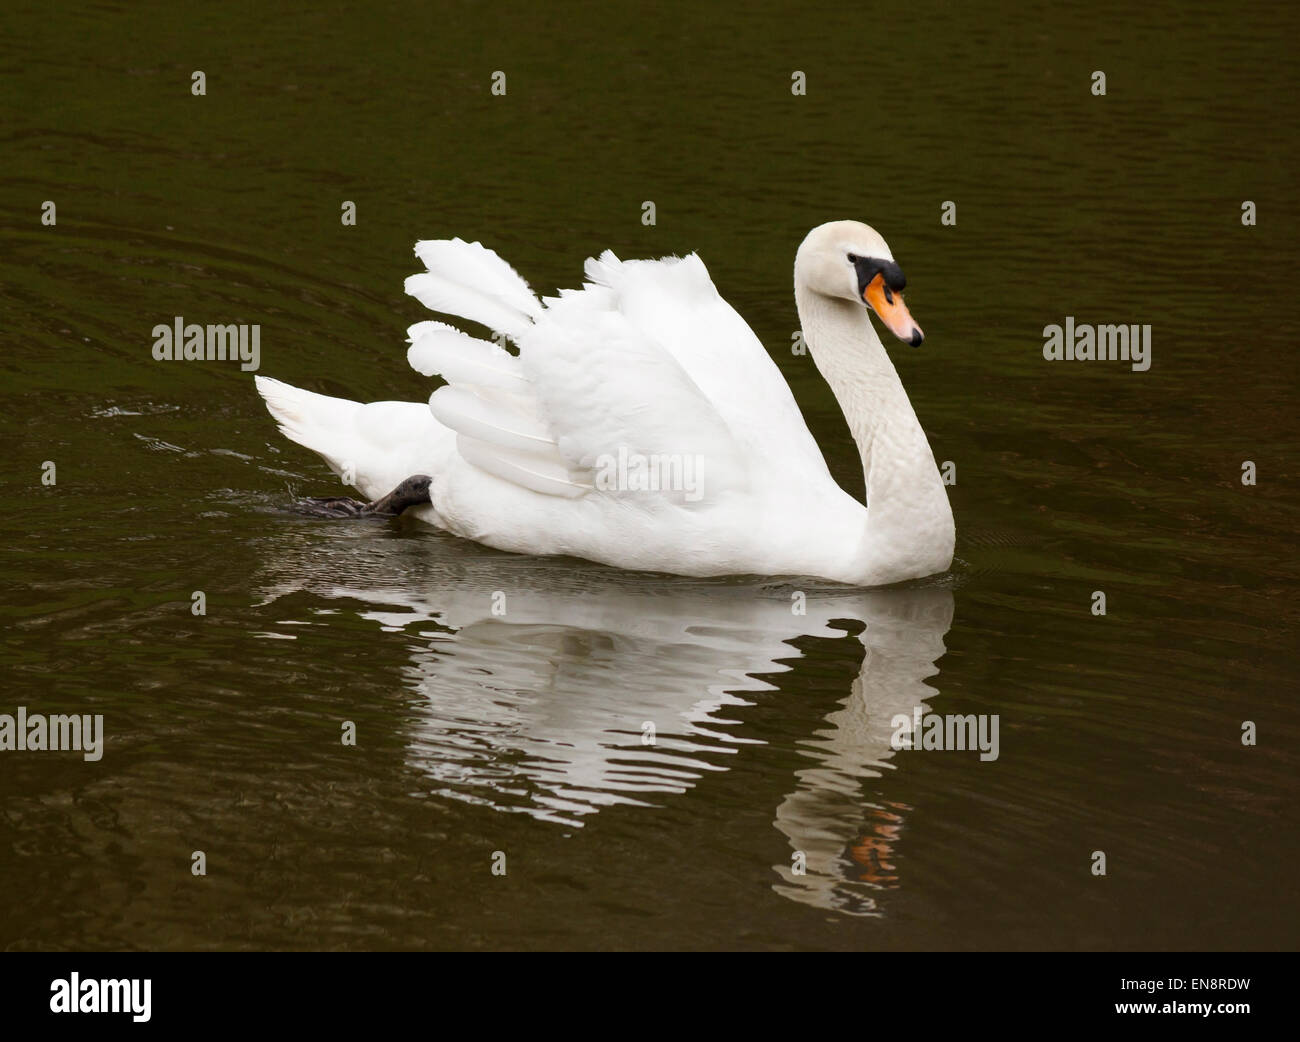 white swan swimming in a lake Stock Photo